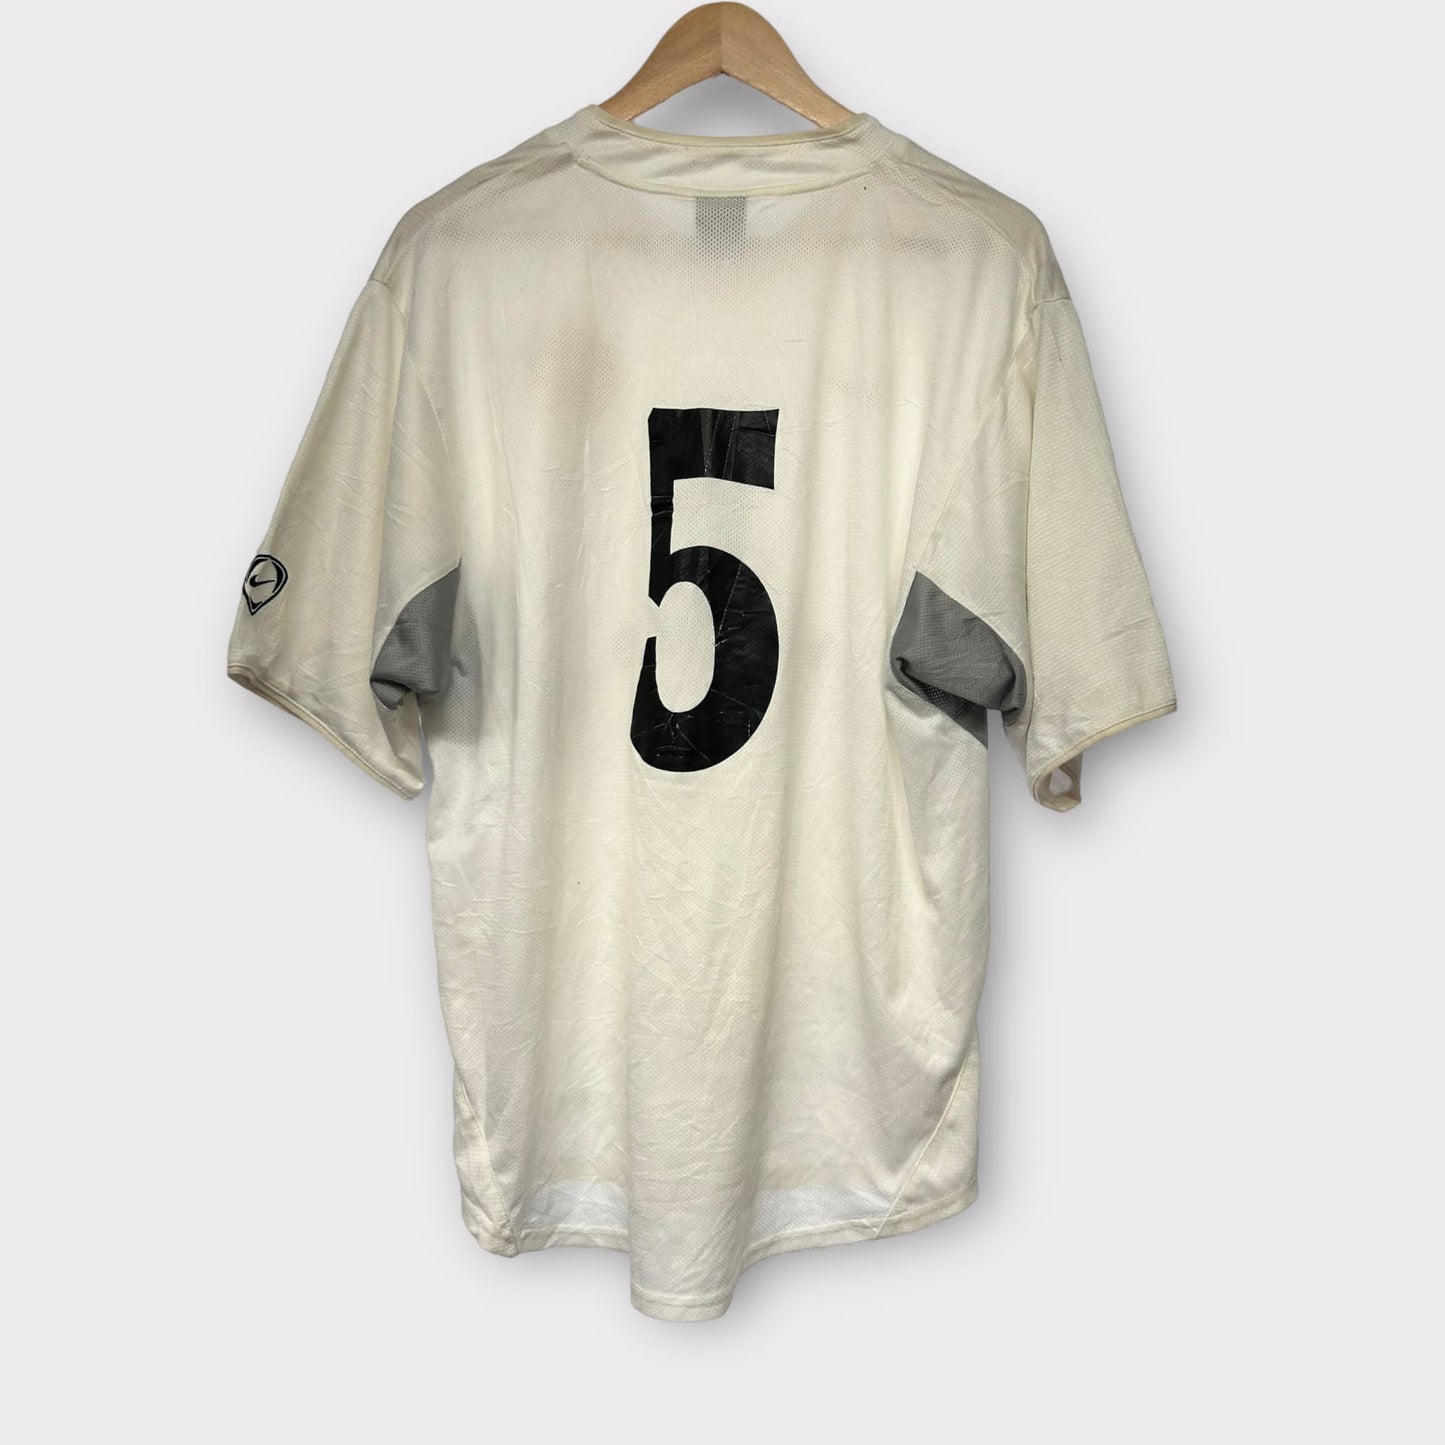 Manchester United 2003/04 - Rio Ferdinand Training Issued Shirt